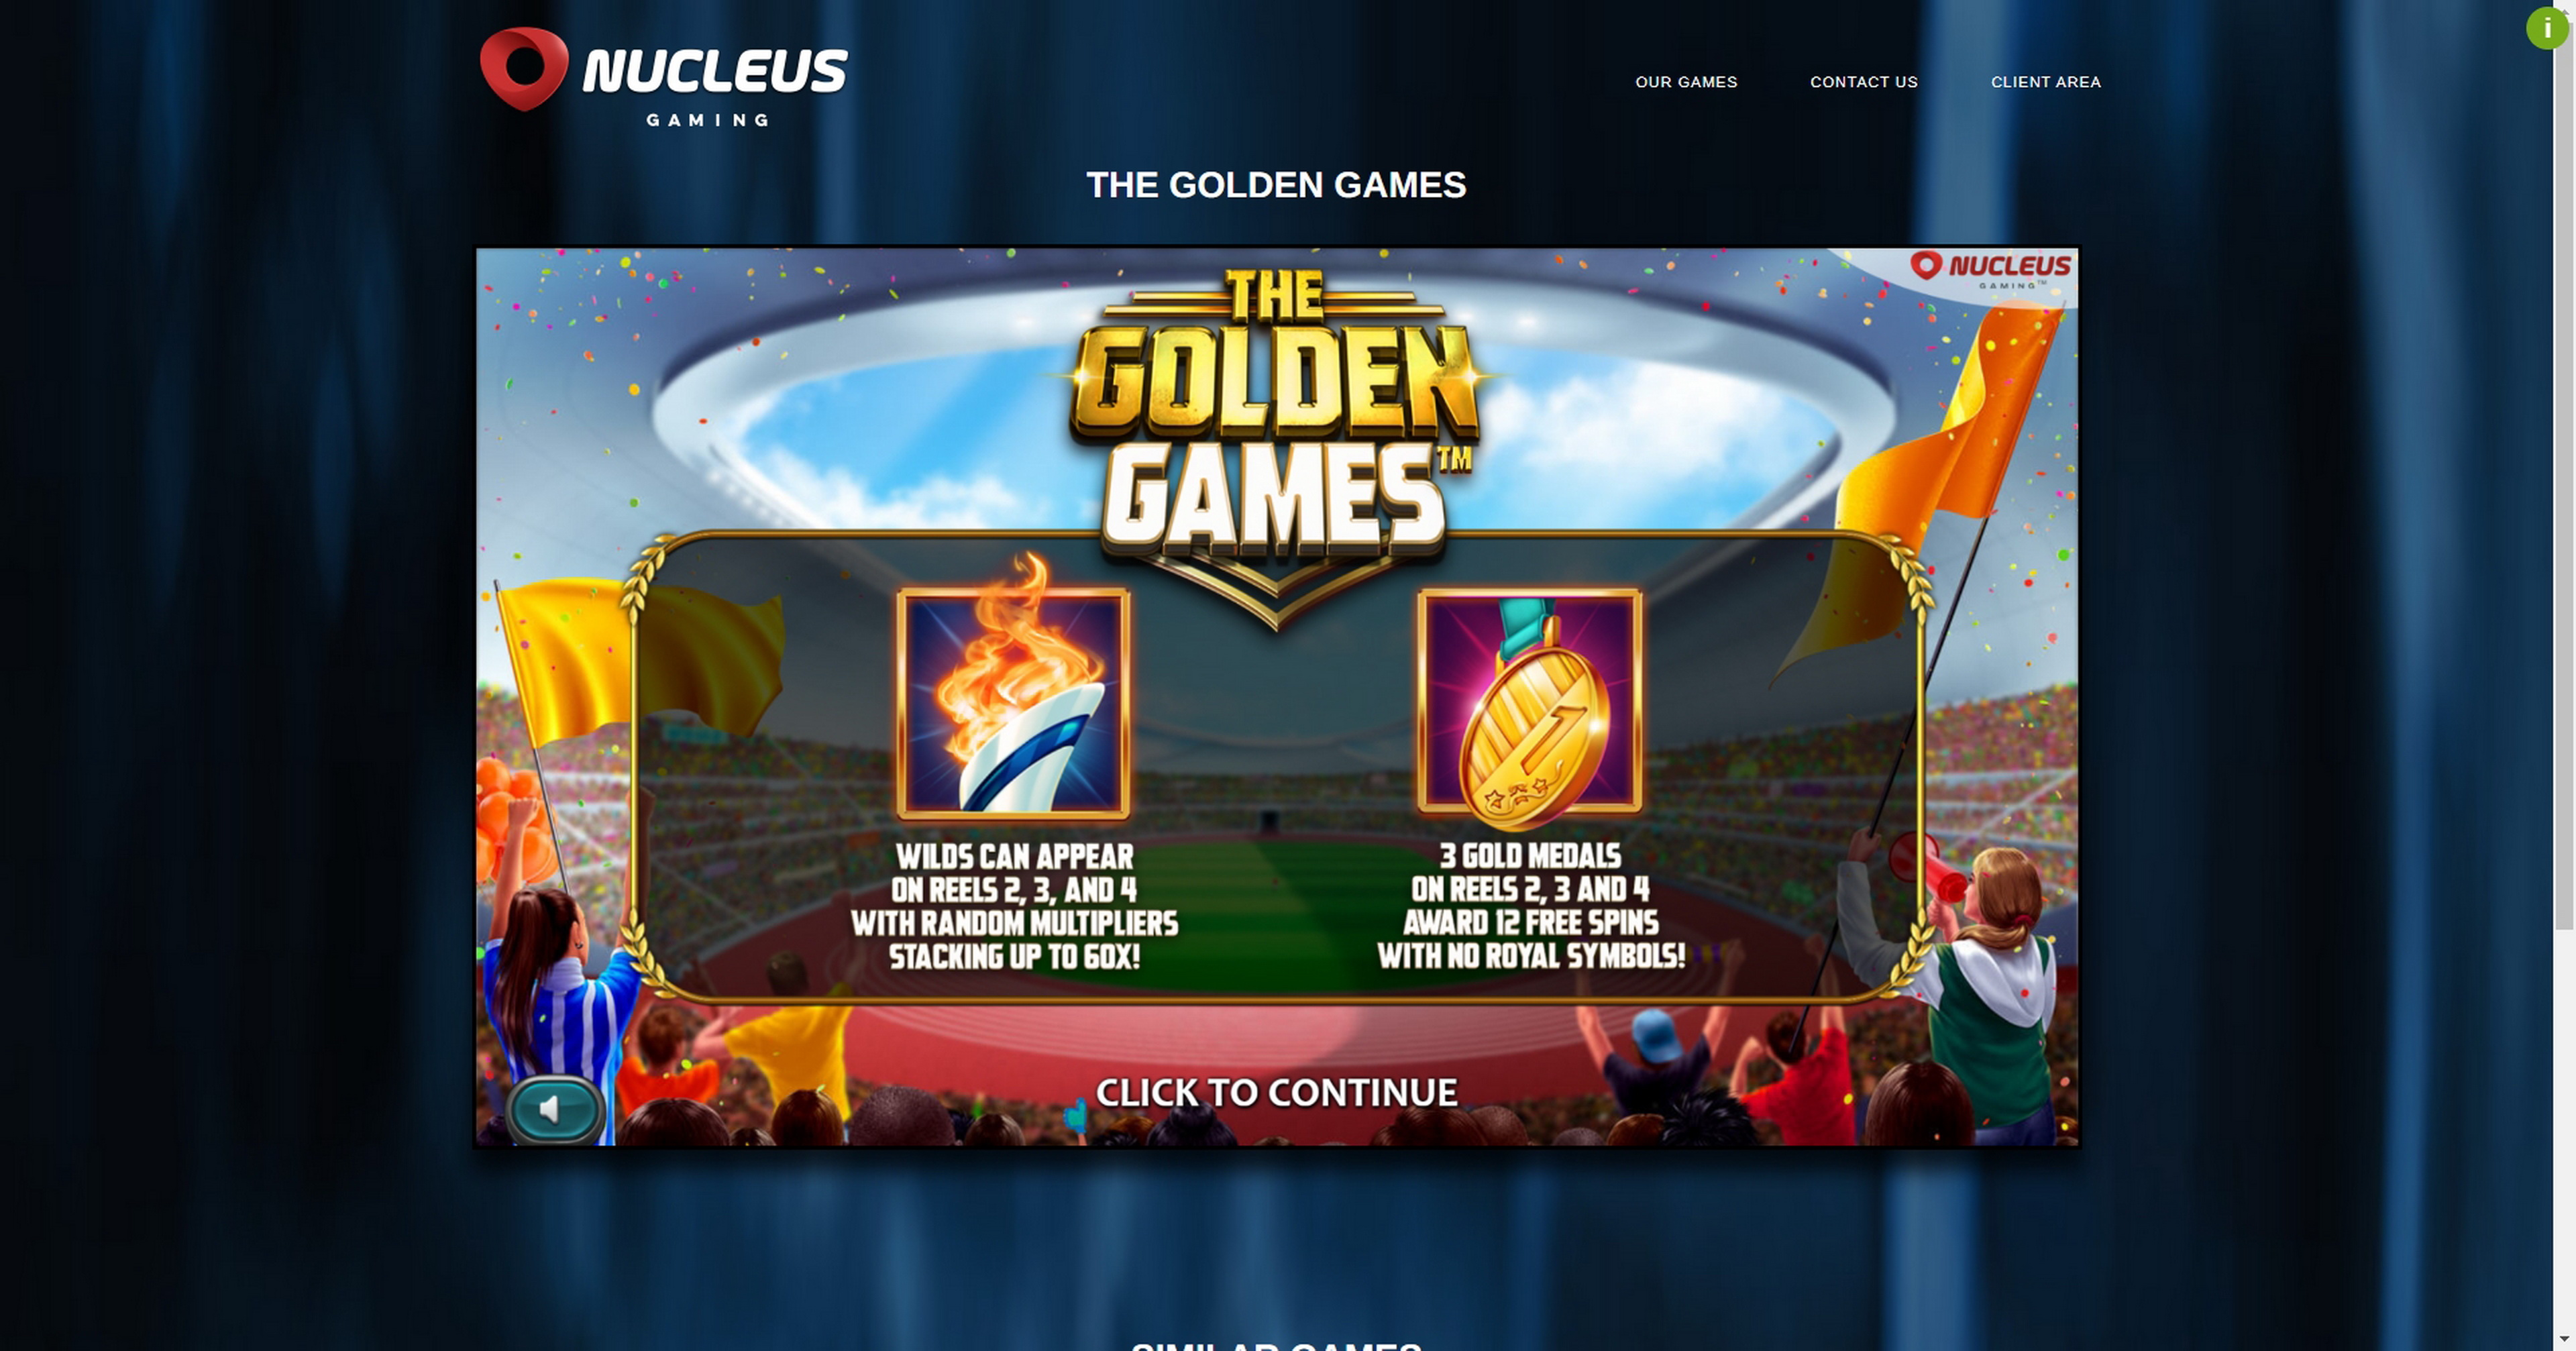 The Golden Games demo